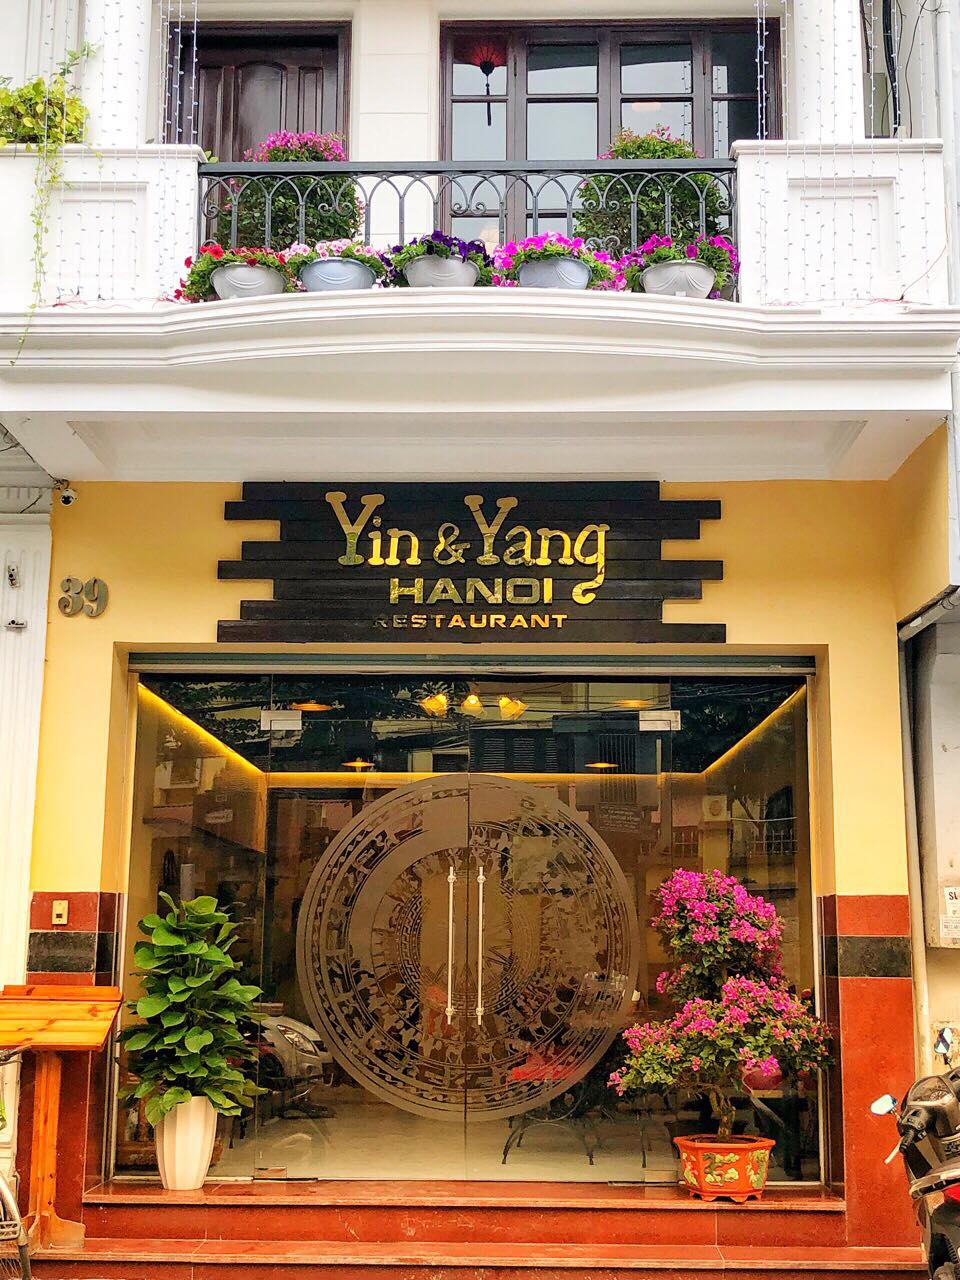 Yin & Yang Hanoi Restaurant